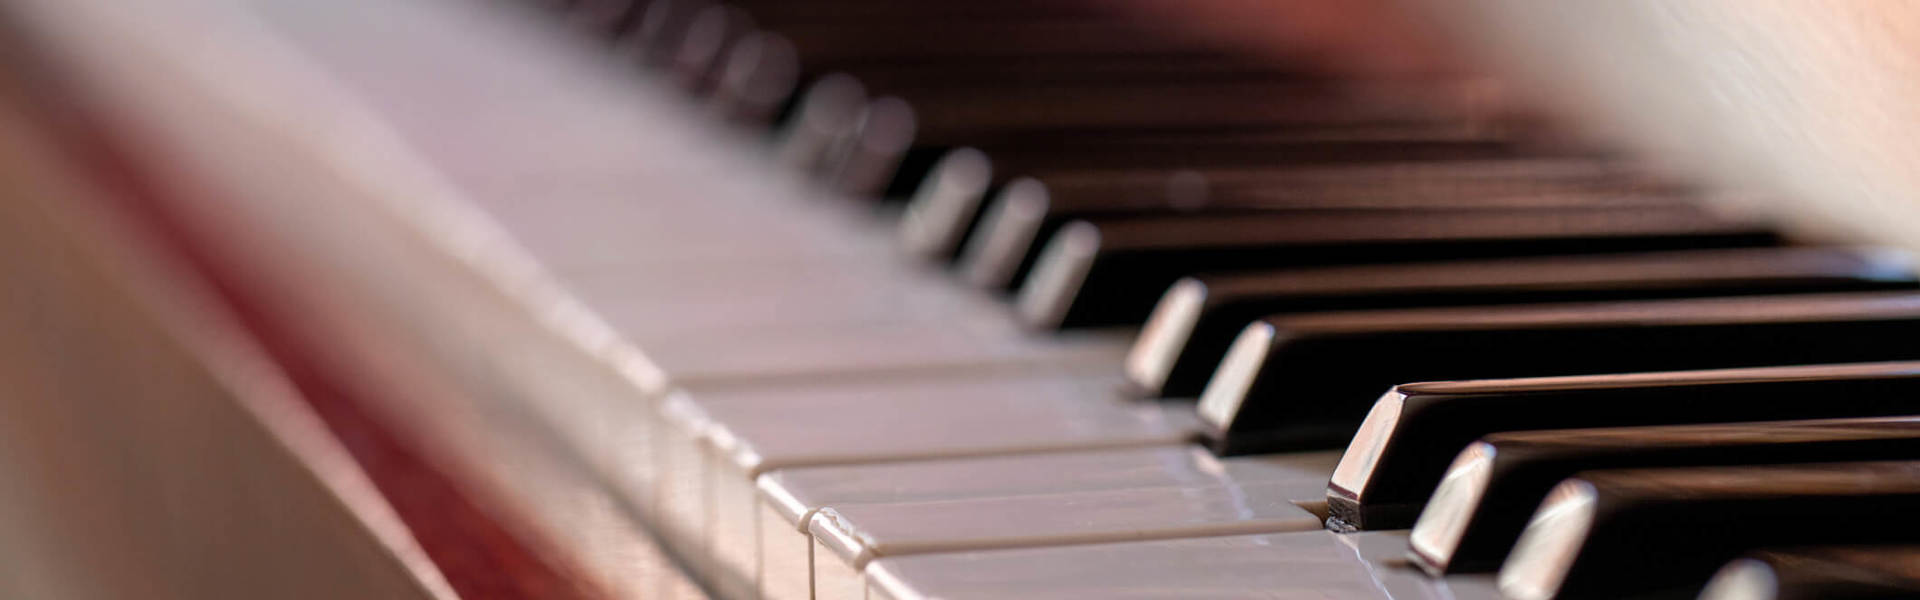 a close up of piano keys